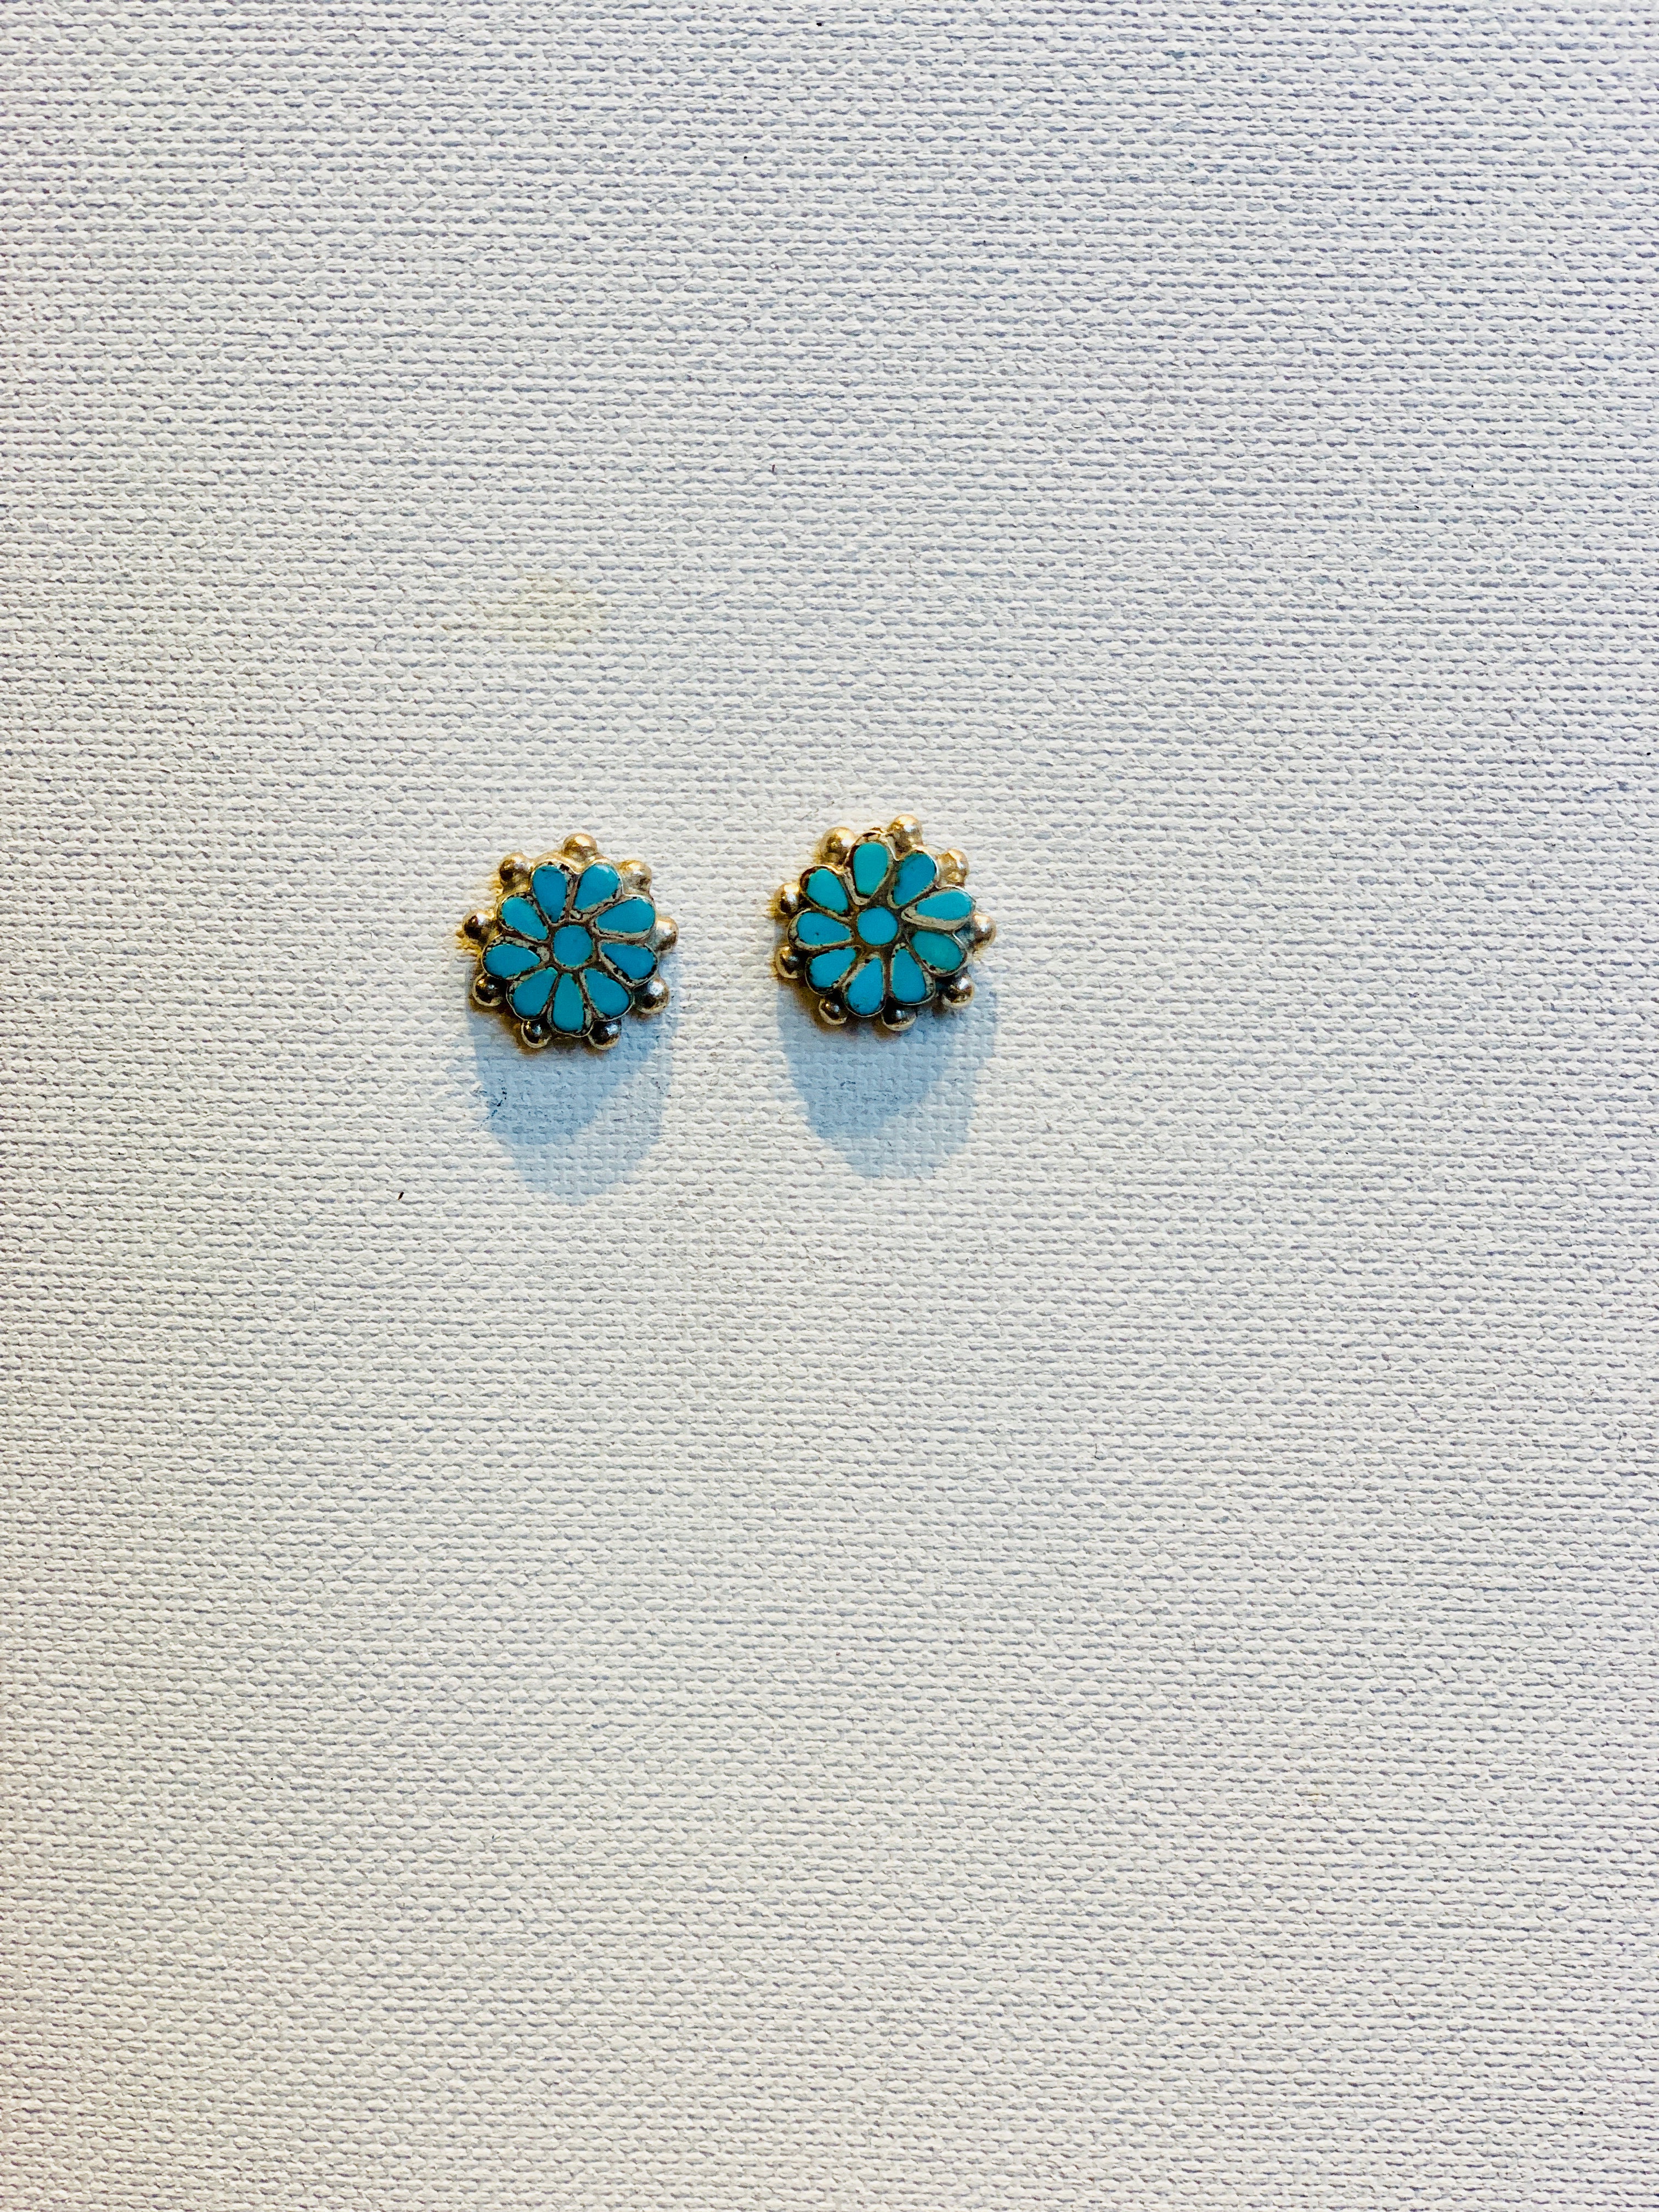 Turquoise Flower Earring Studs